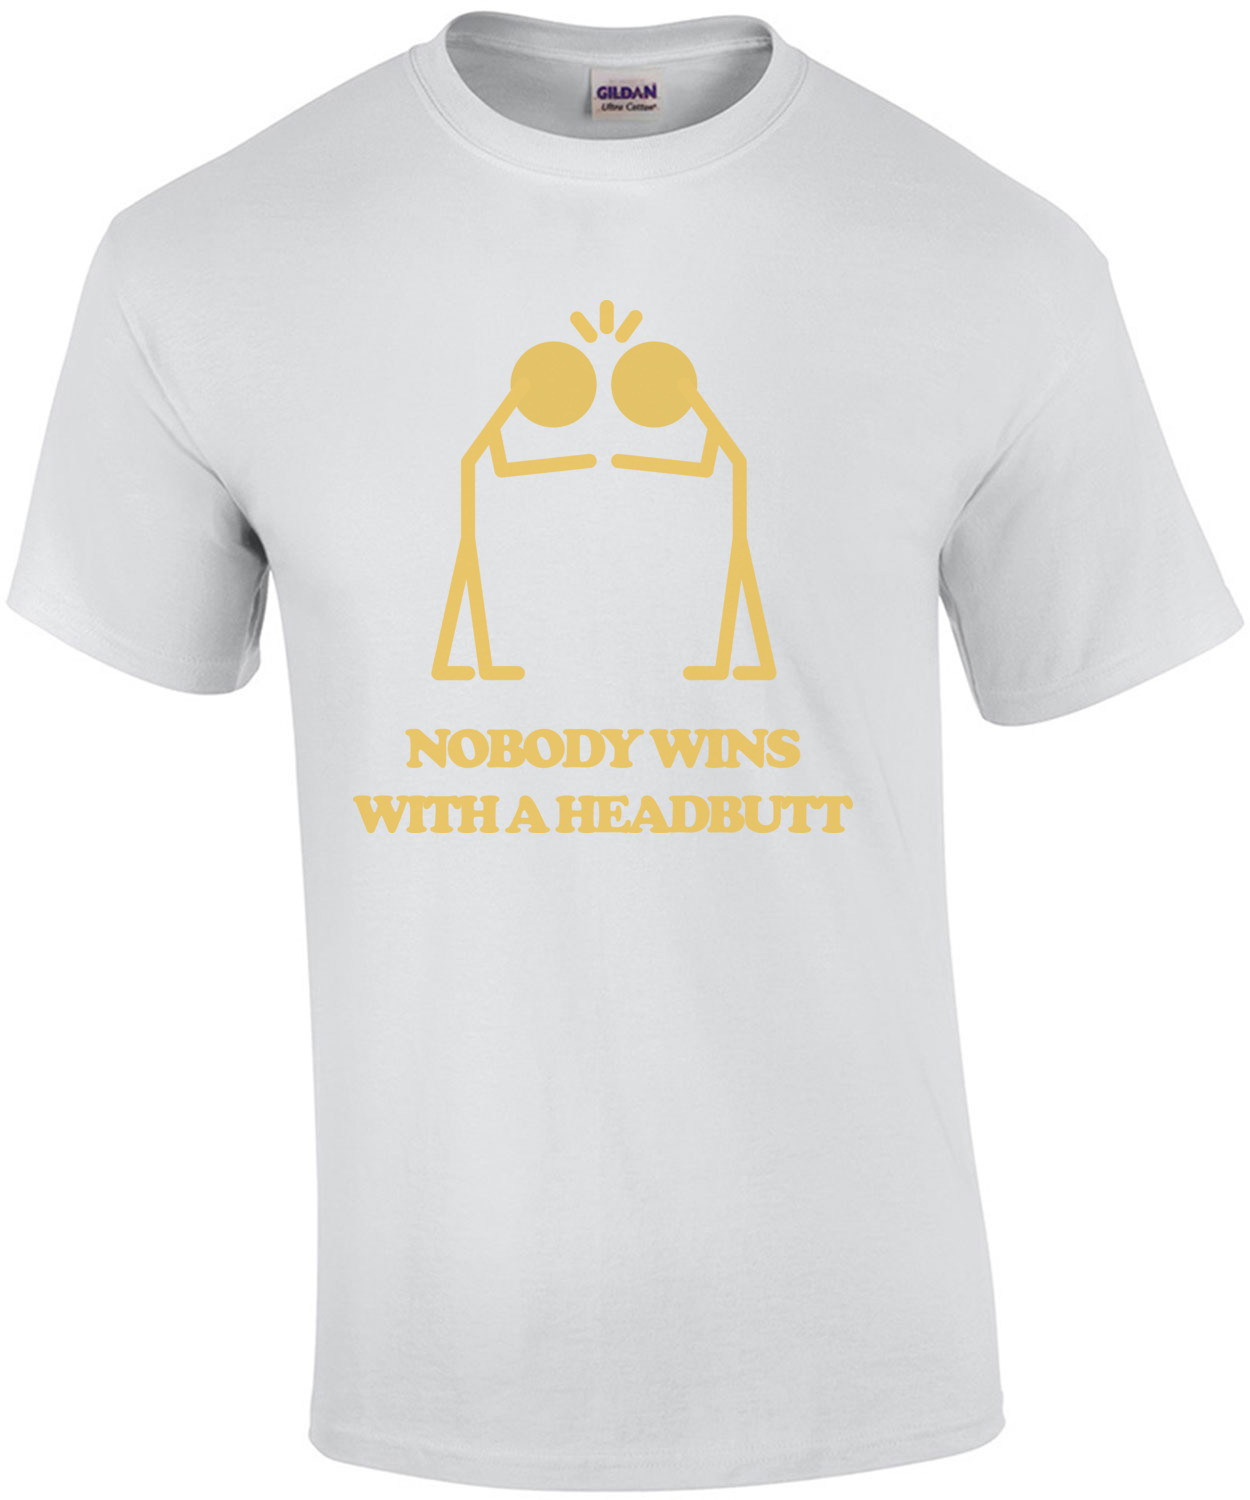 Nobody wins with a headbutt T-Shirt